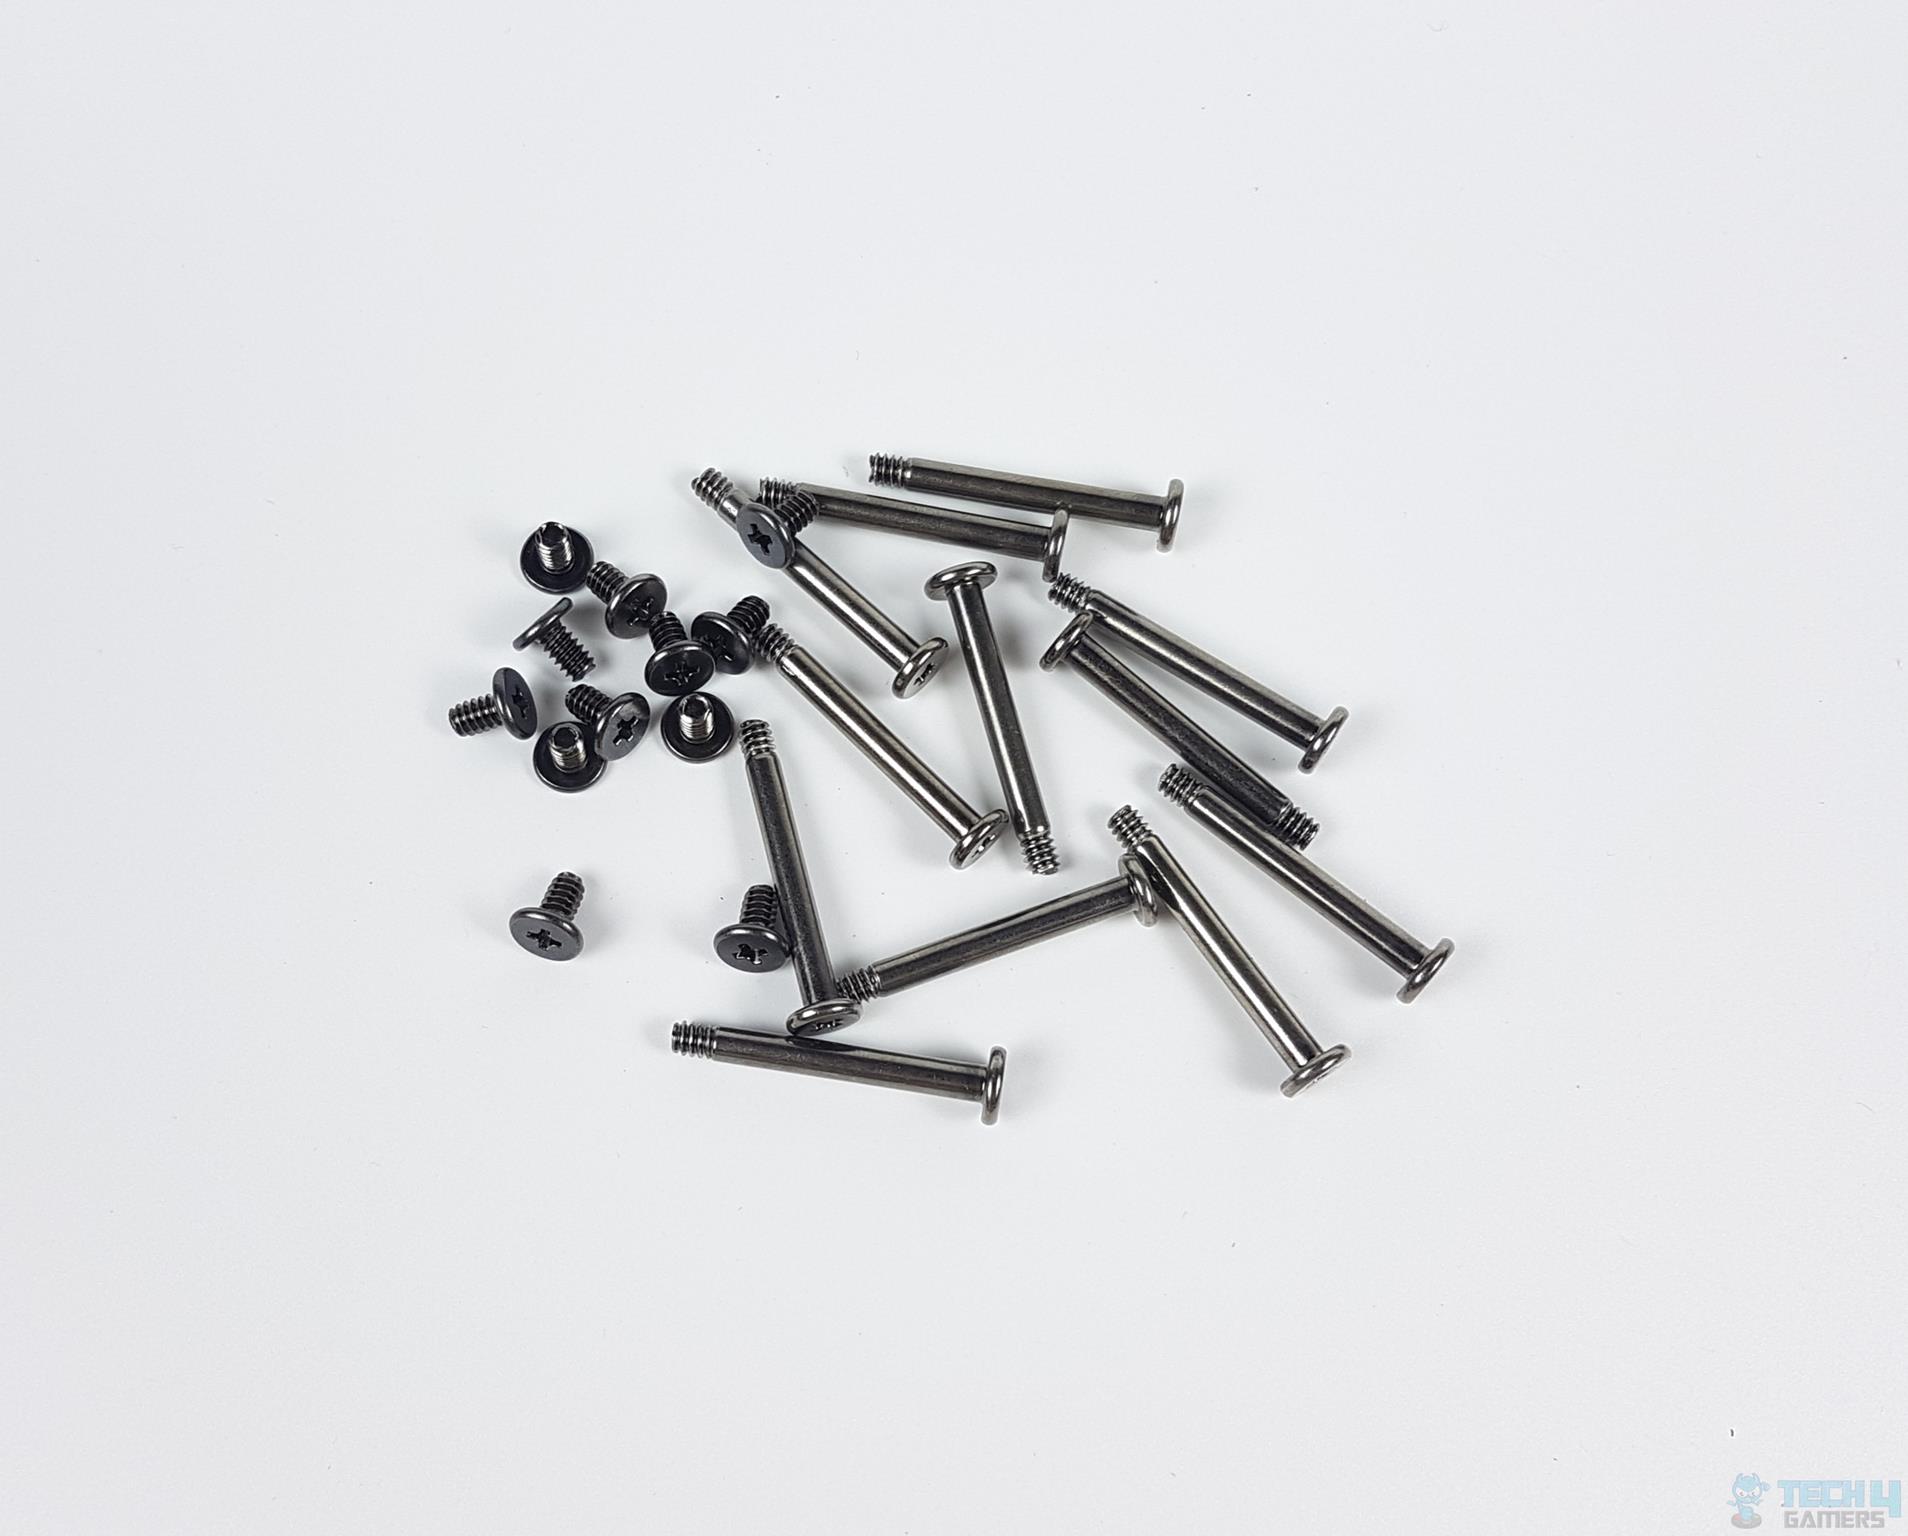 SilverStone iCEGEM 360 Liquid Cooler — Long and small screws